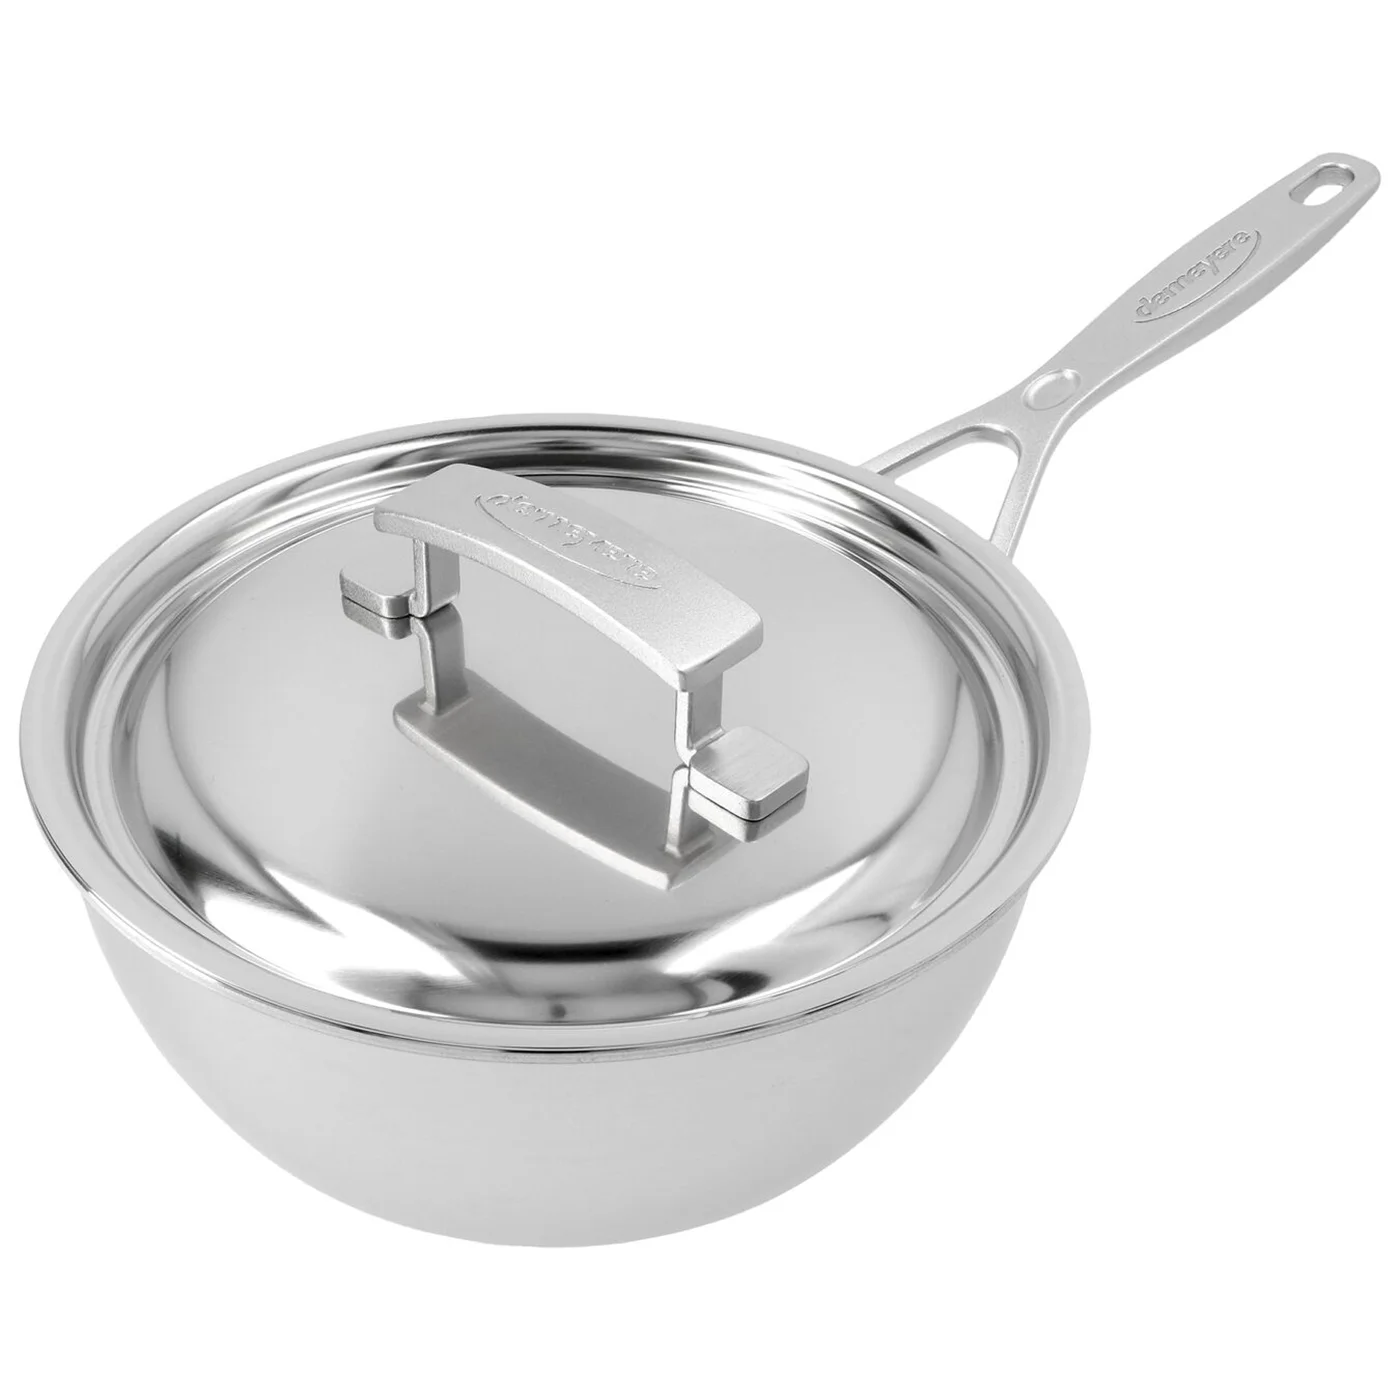 Buy Demeyere Industry 5 Saute pan with lid